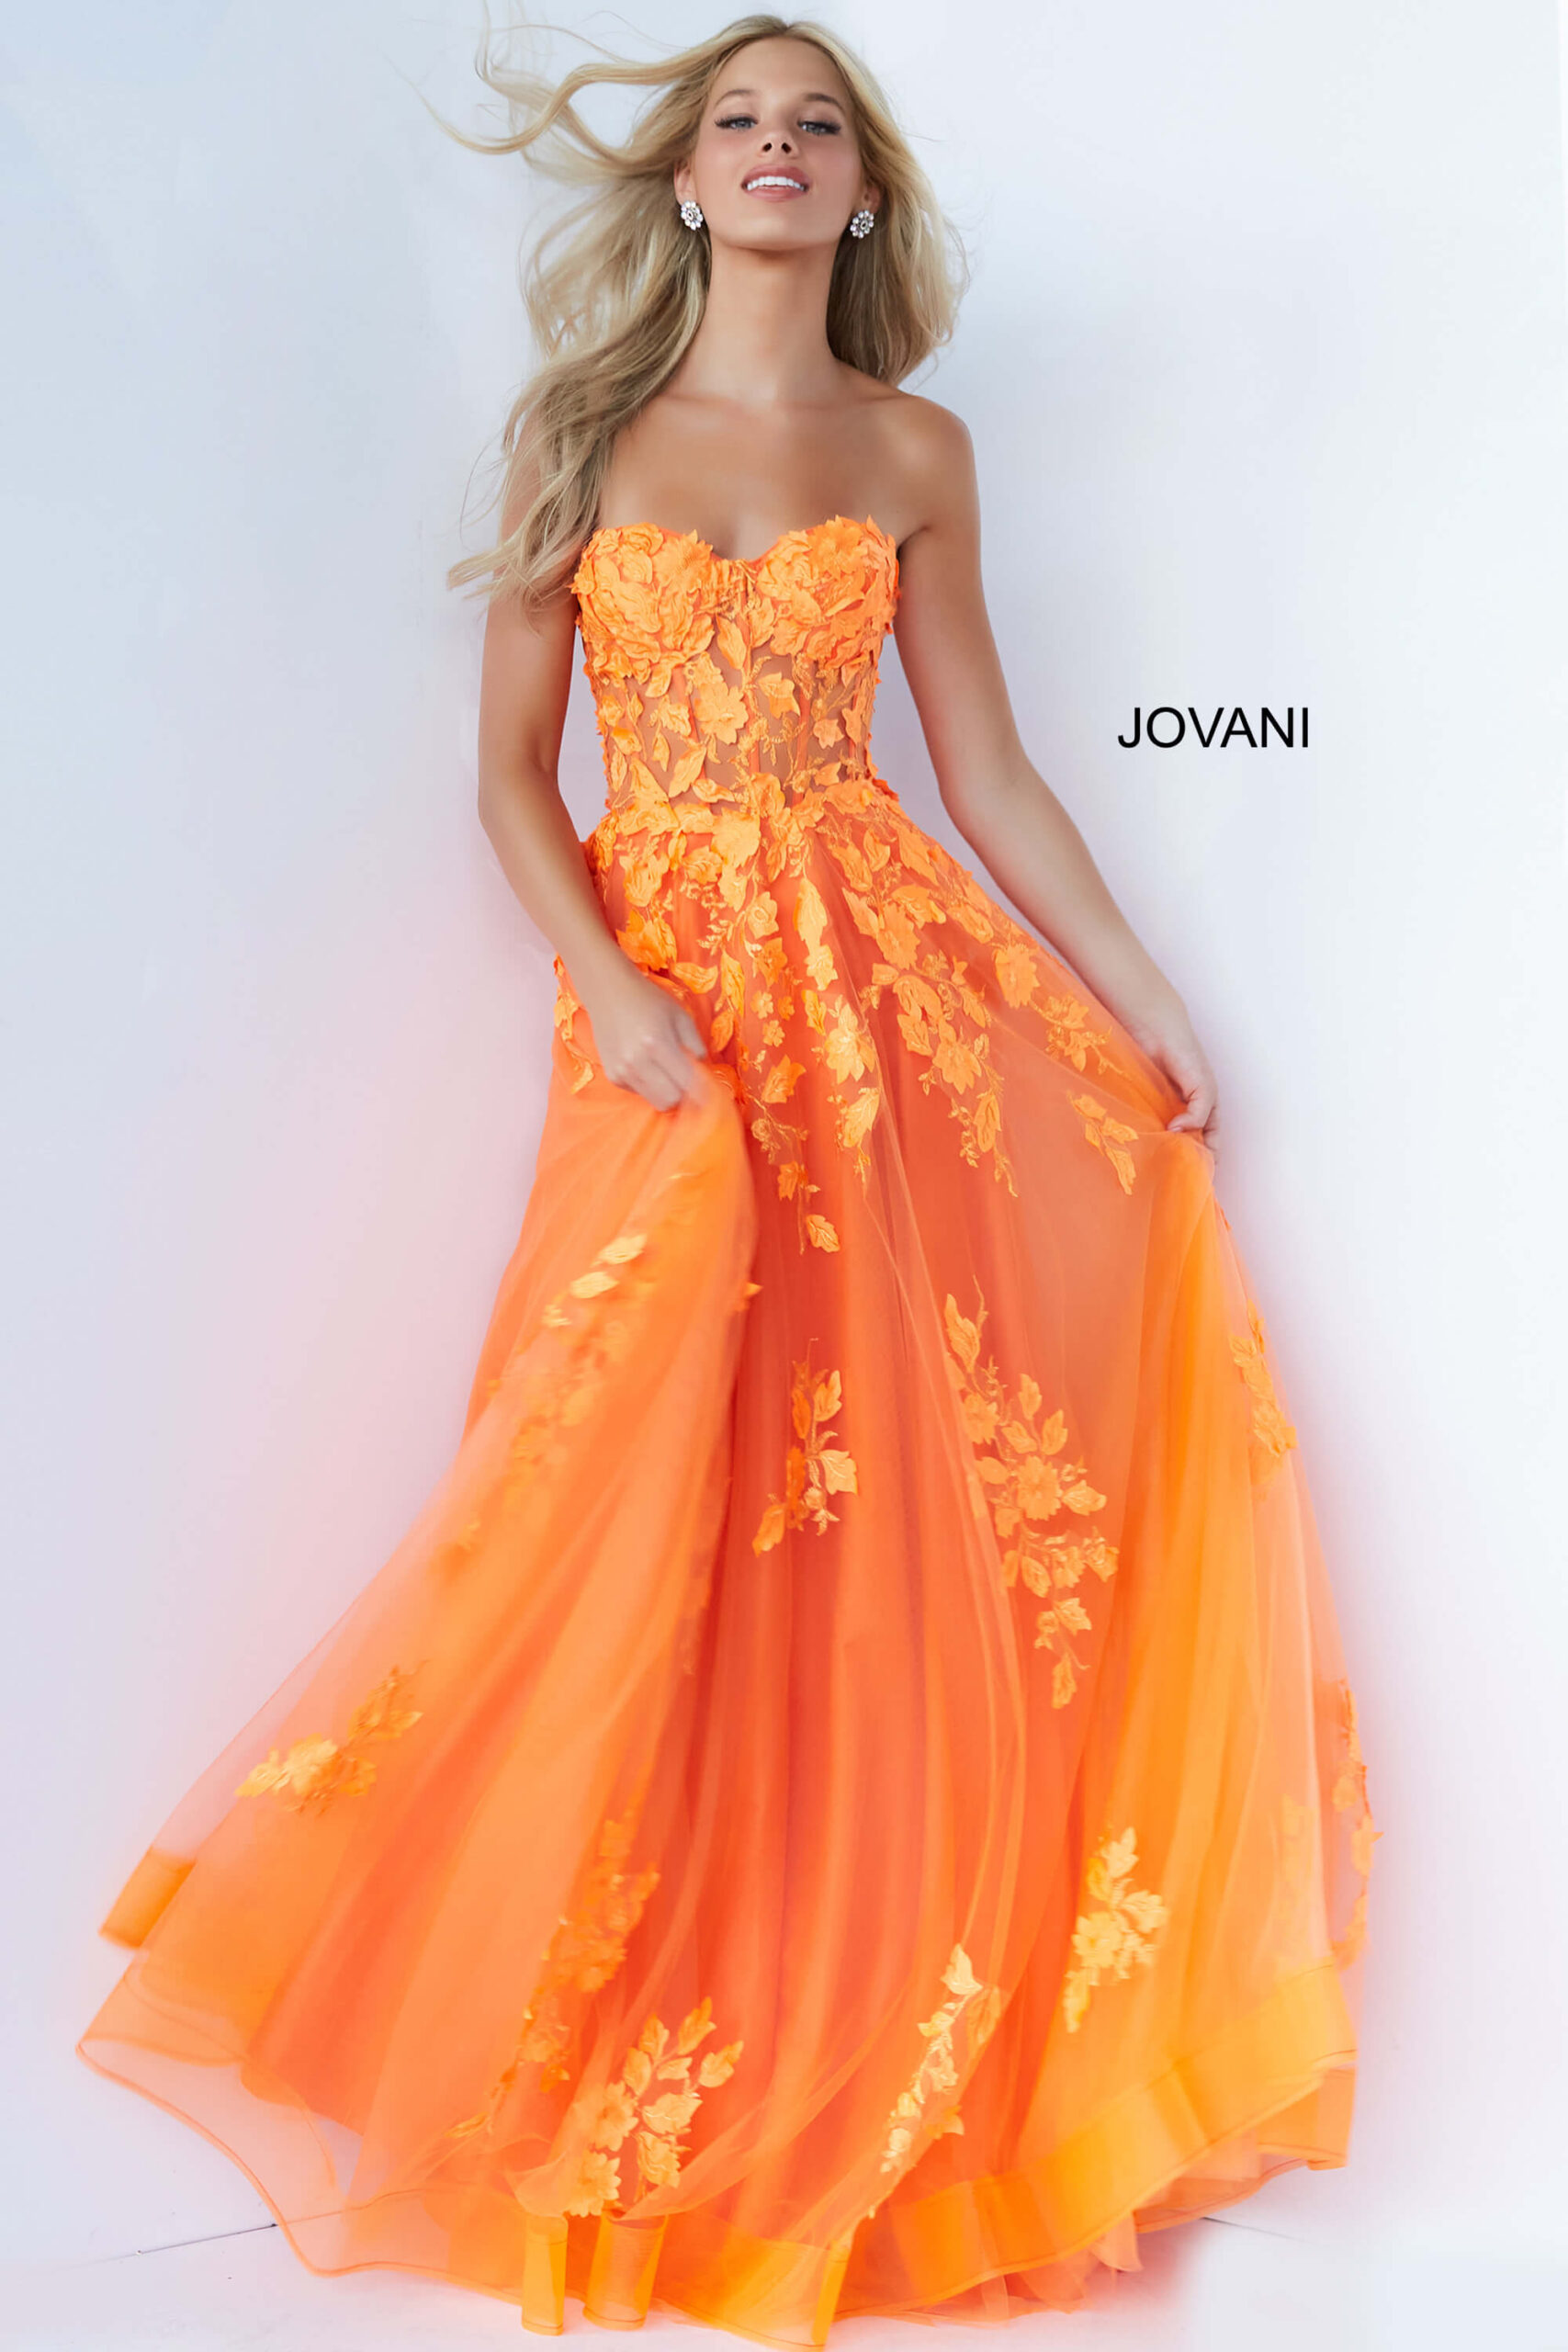 Jovani 07901 Orange Lace Appliques Strapless Prom Gown